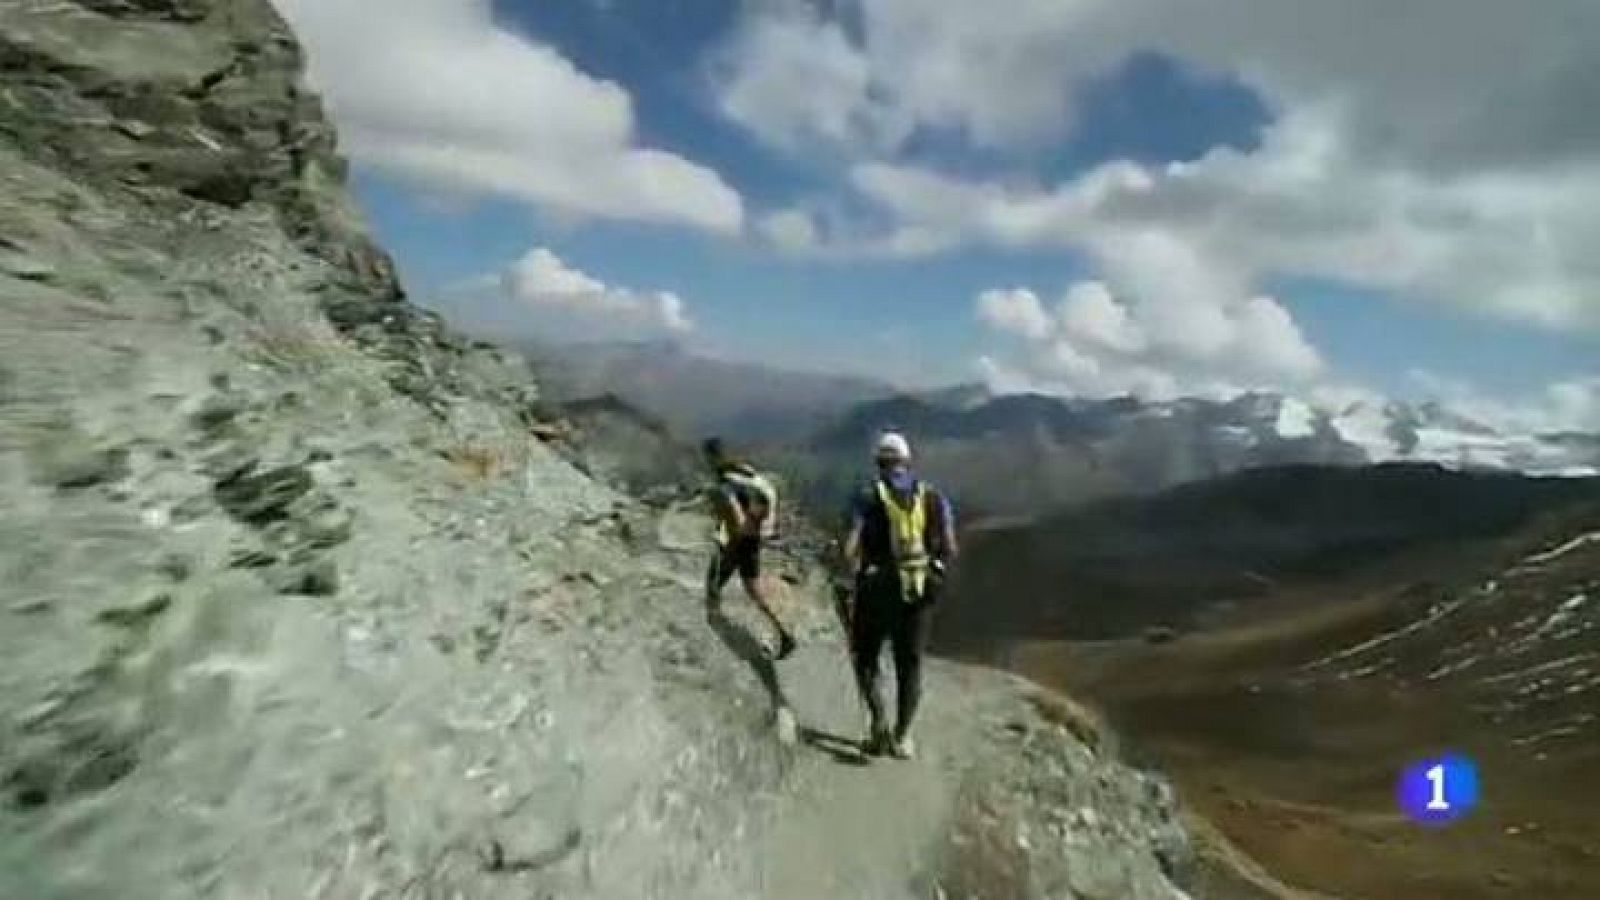 Telediario 1: Óscar Pérez ganador de la "Tor des Geants", terrible carrera alpina. | RTVE Play